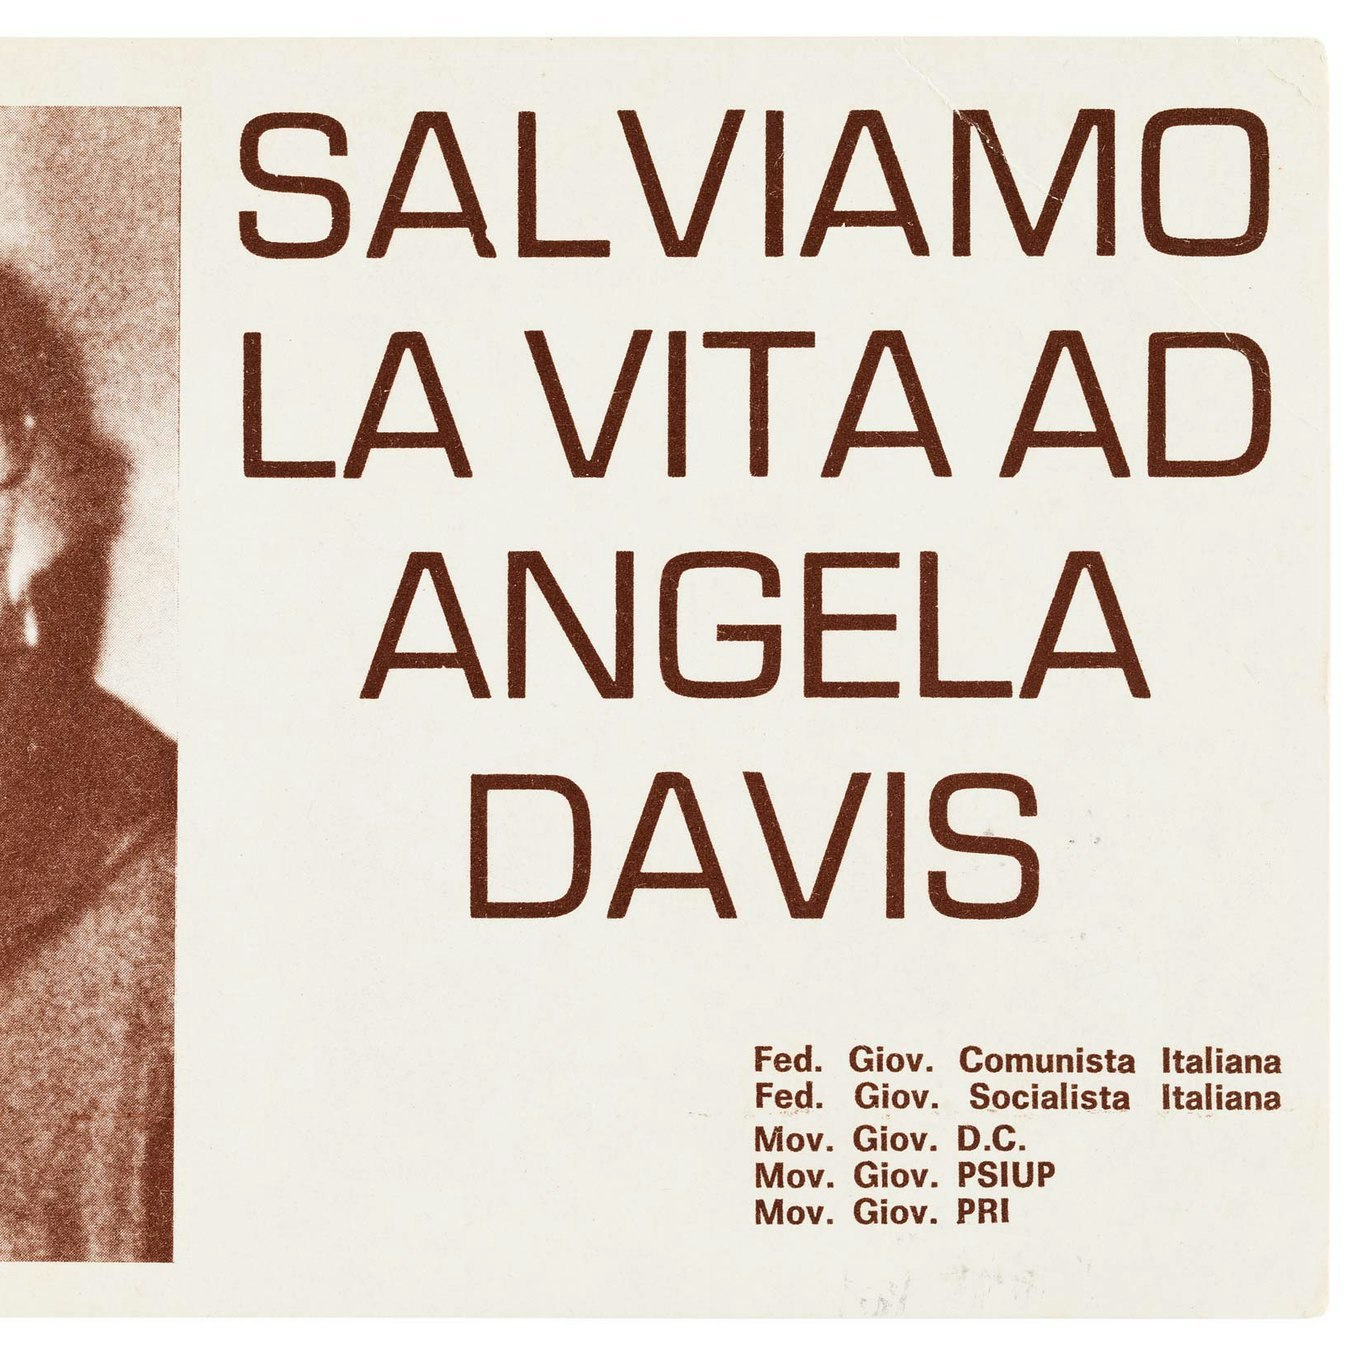 Sepia toned postcard with portrait of Angela Davis on the lefthand side, and text reading "Salviamo La Vita AD Angela Davis."